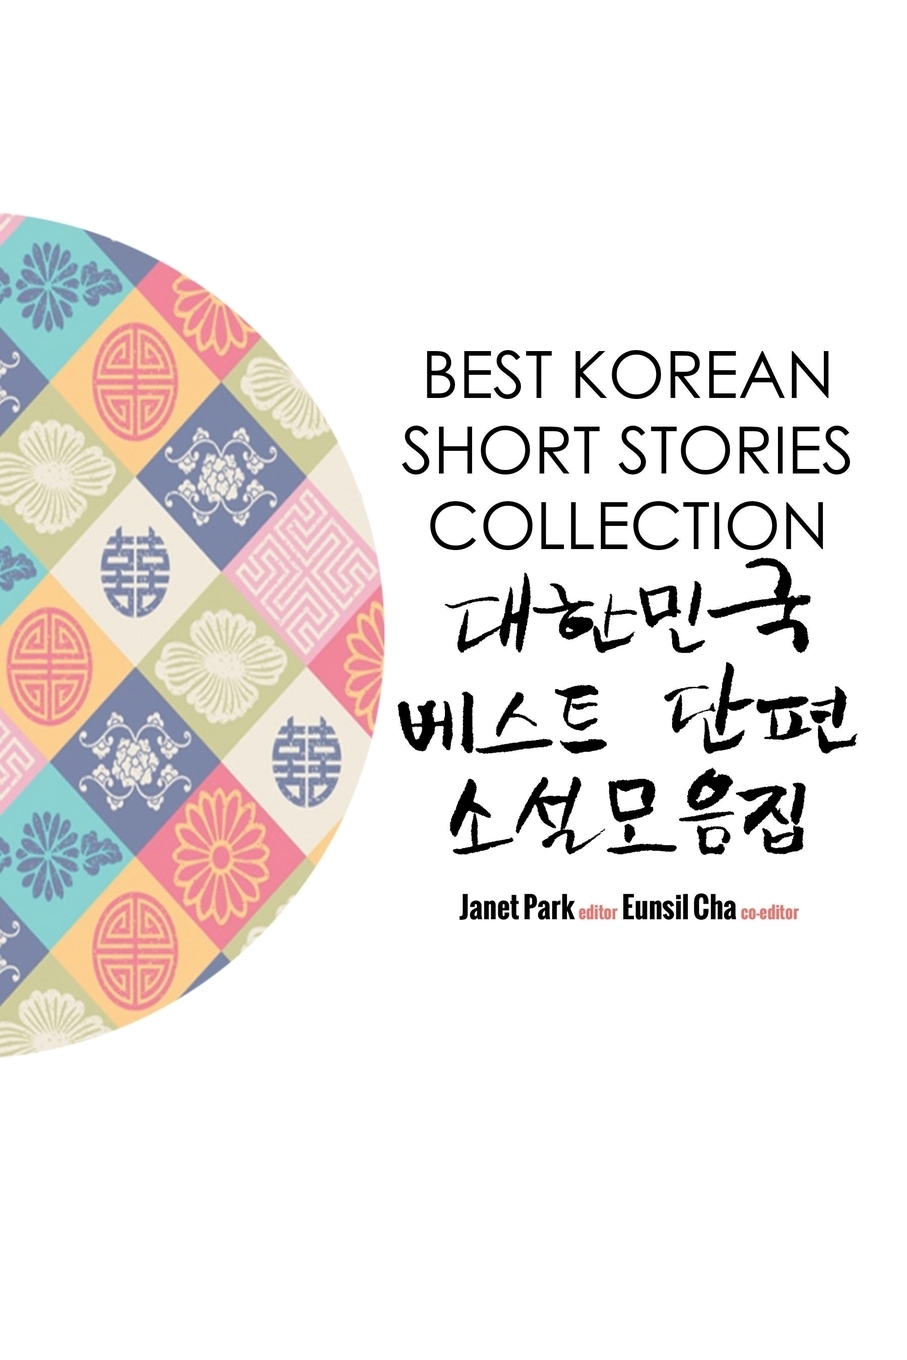 Stories korean